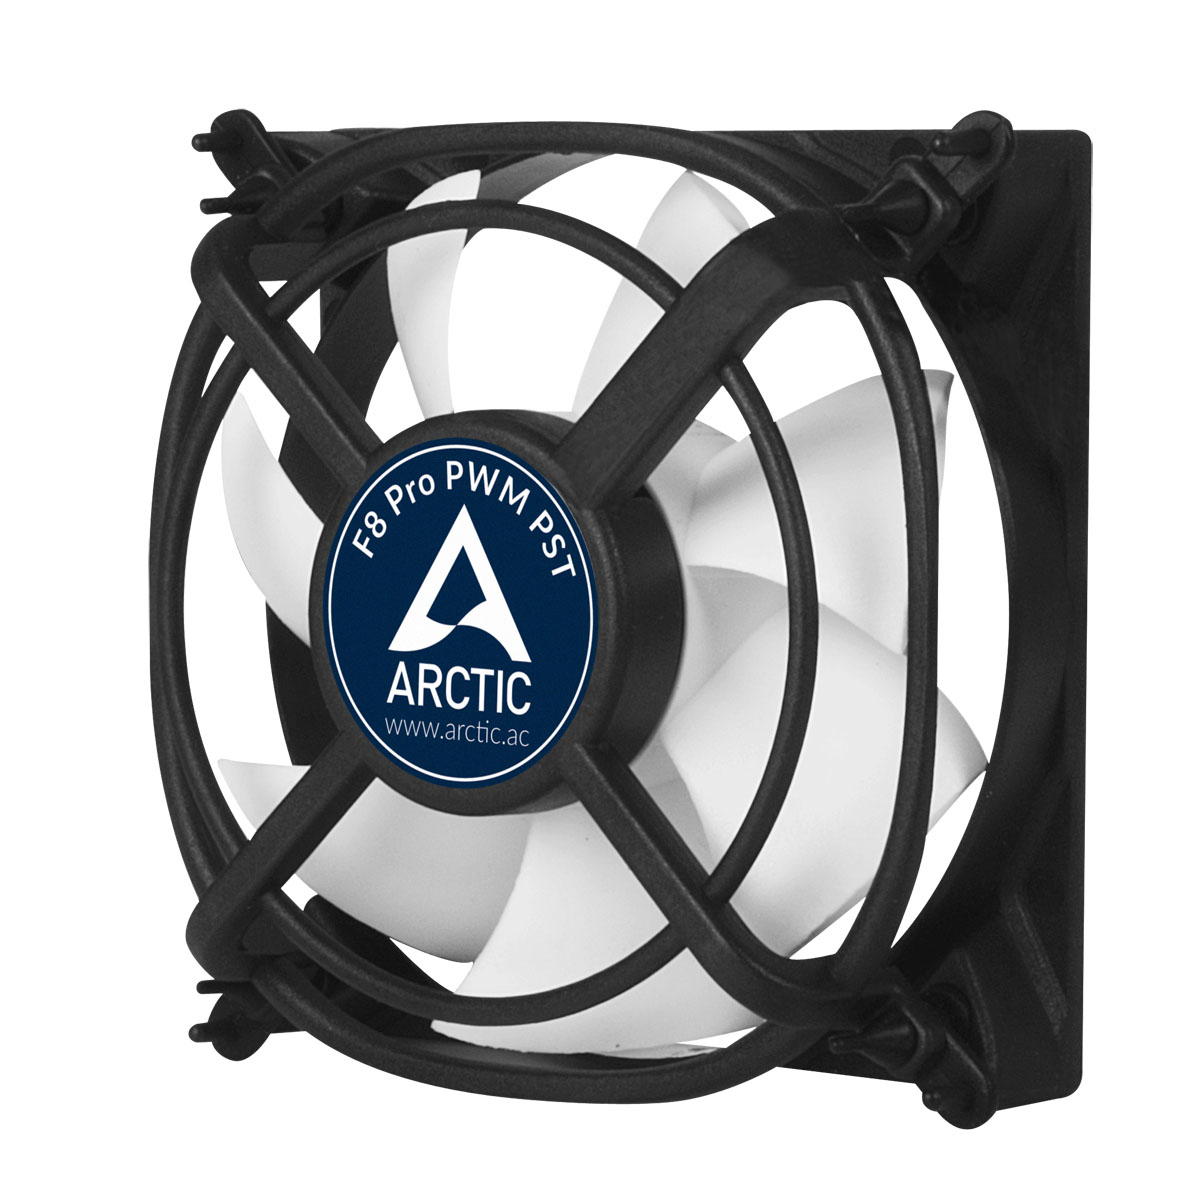 Arctic Cooling F8 Pro Pwm 80mm Fan Low Noise Arctic Cooling